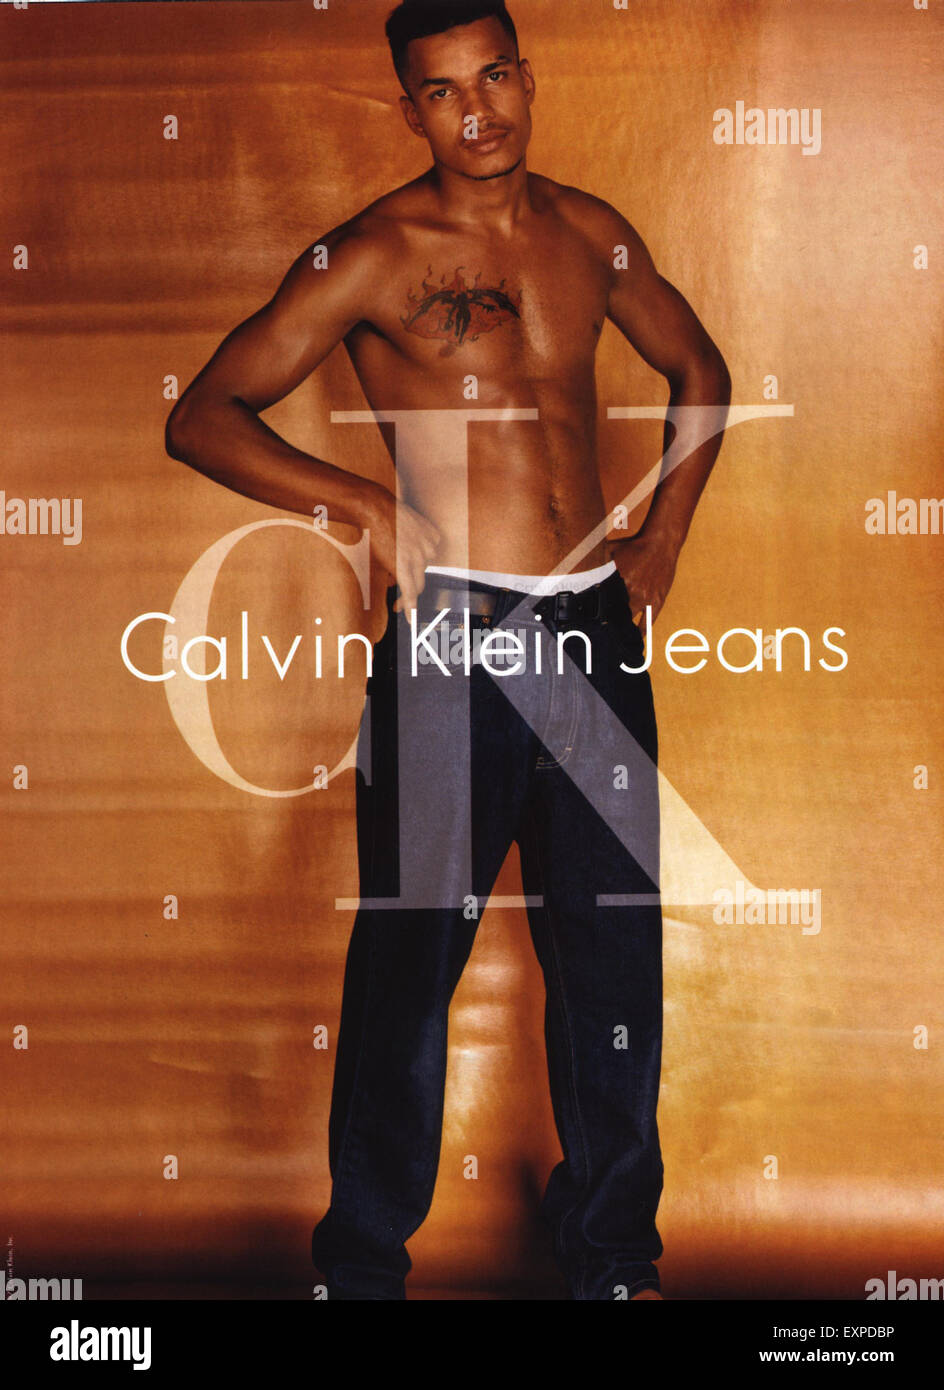 Calvin klein jeans fotografías e imágenes de alta resolución - Página 4 -  Alamy